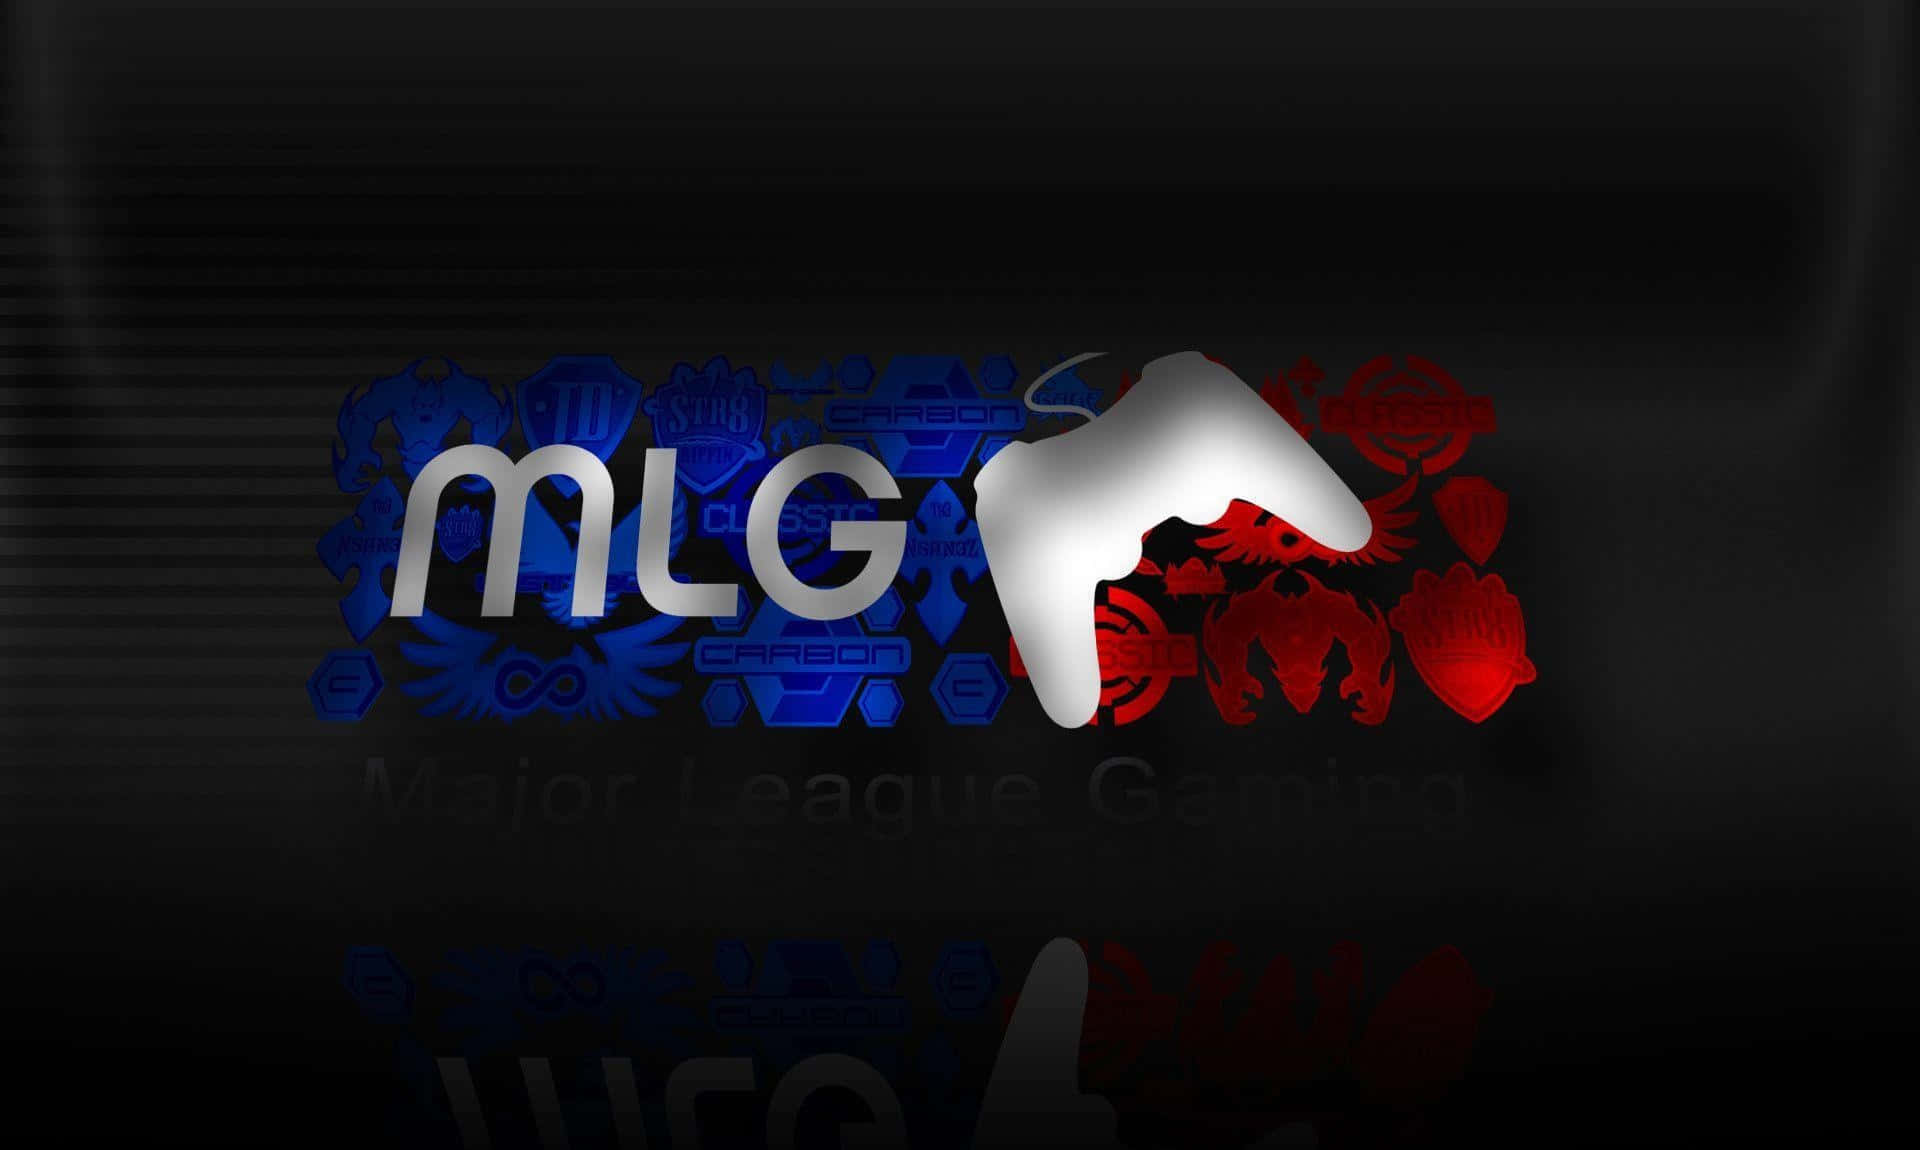 MLG Gaming Championship, Let’s Go Gaming